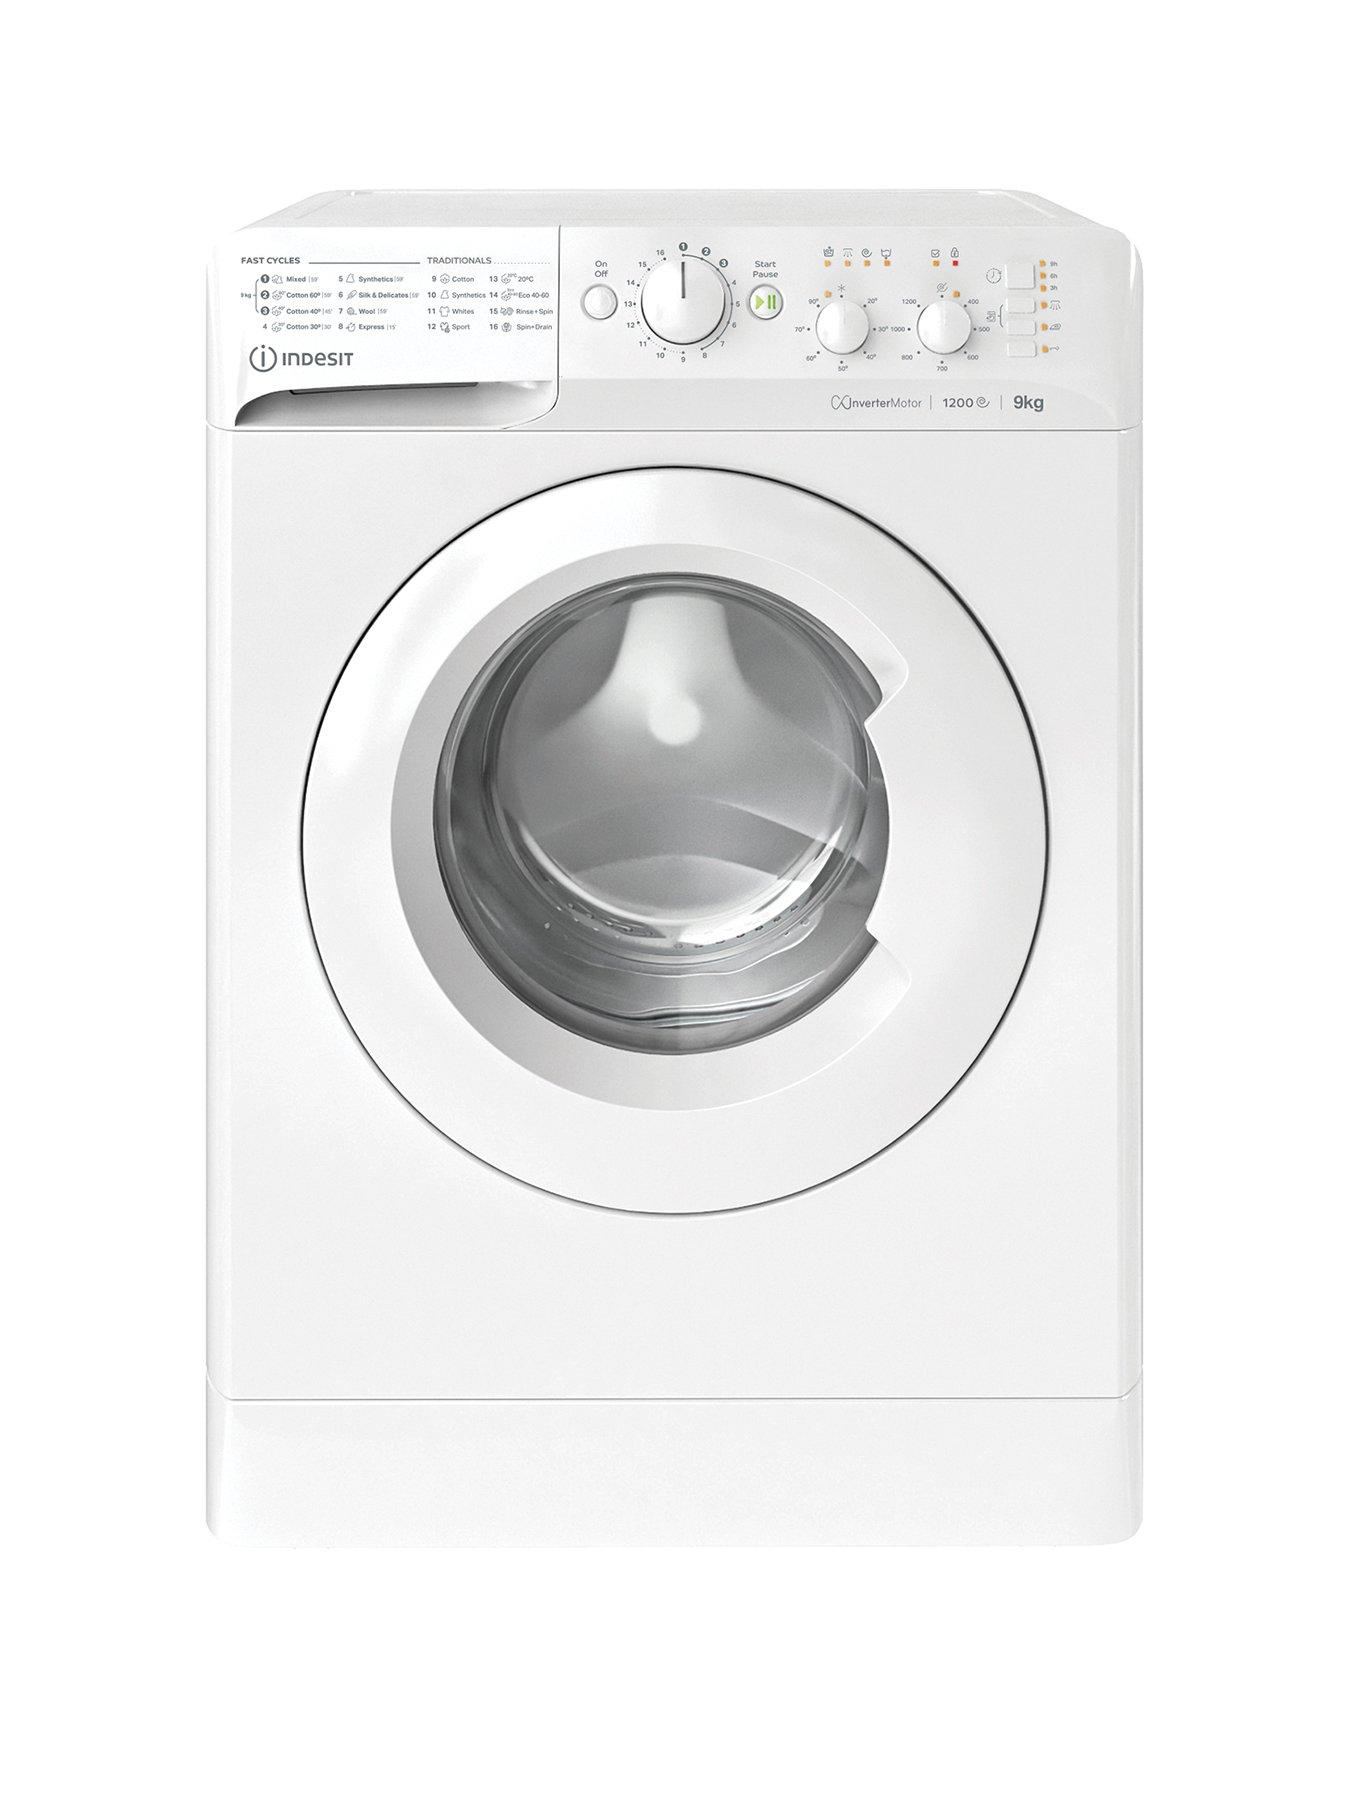 Indesit Mtwc91295Wukn 9Kg Load, 1200Rpm Spin Washing Machine - White